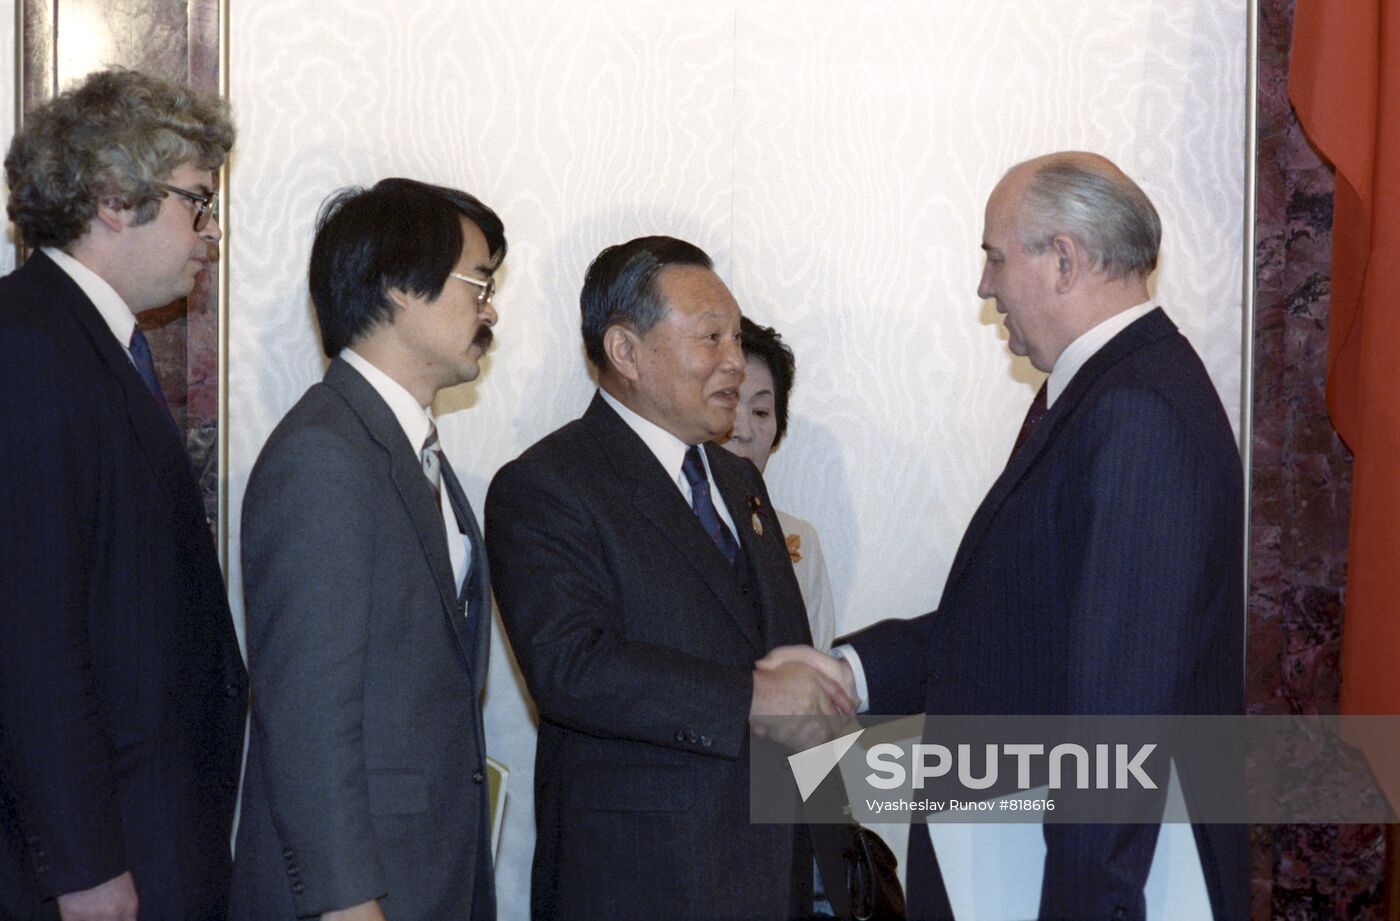 Mikhail Gorbachev meeting with Yoshihiko Tsuchiya